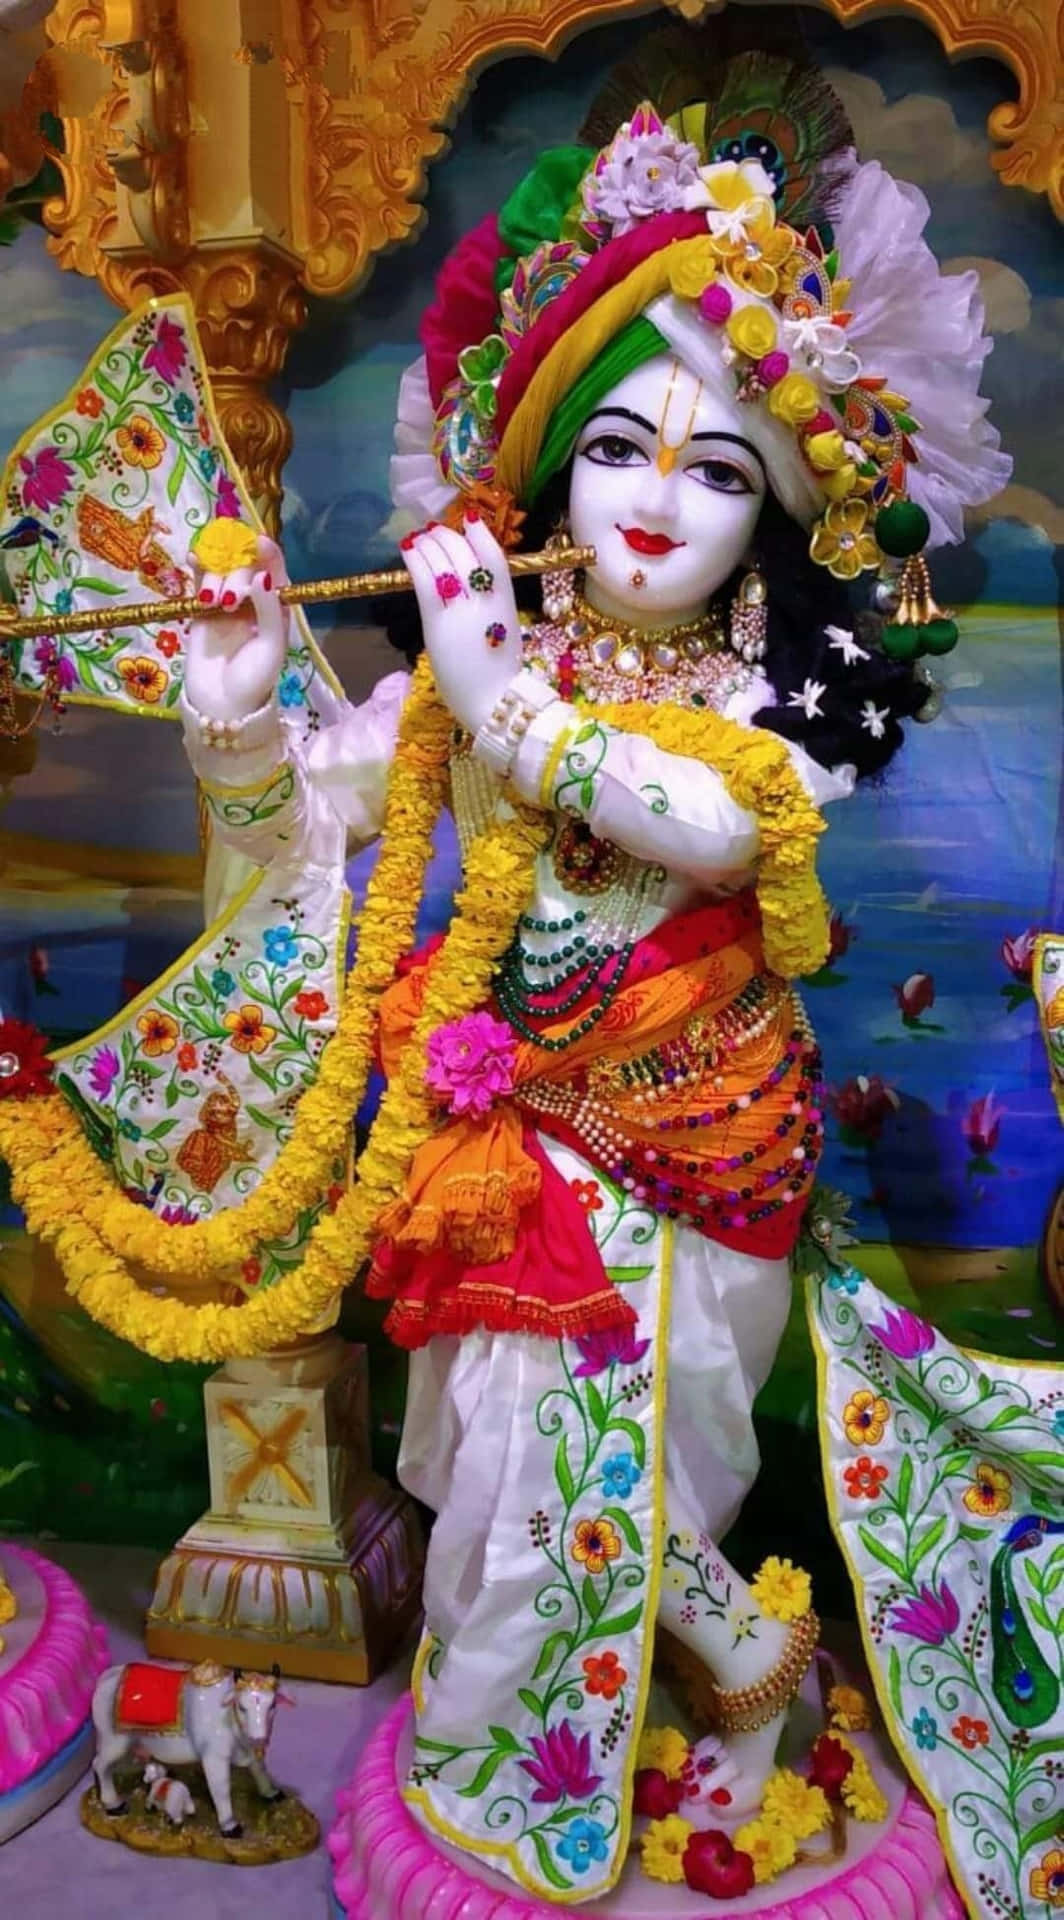 Krishna, the Lord of Love